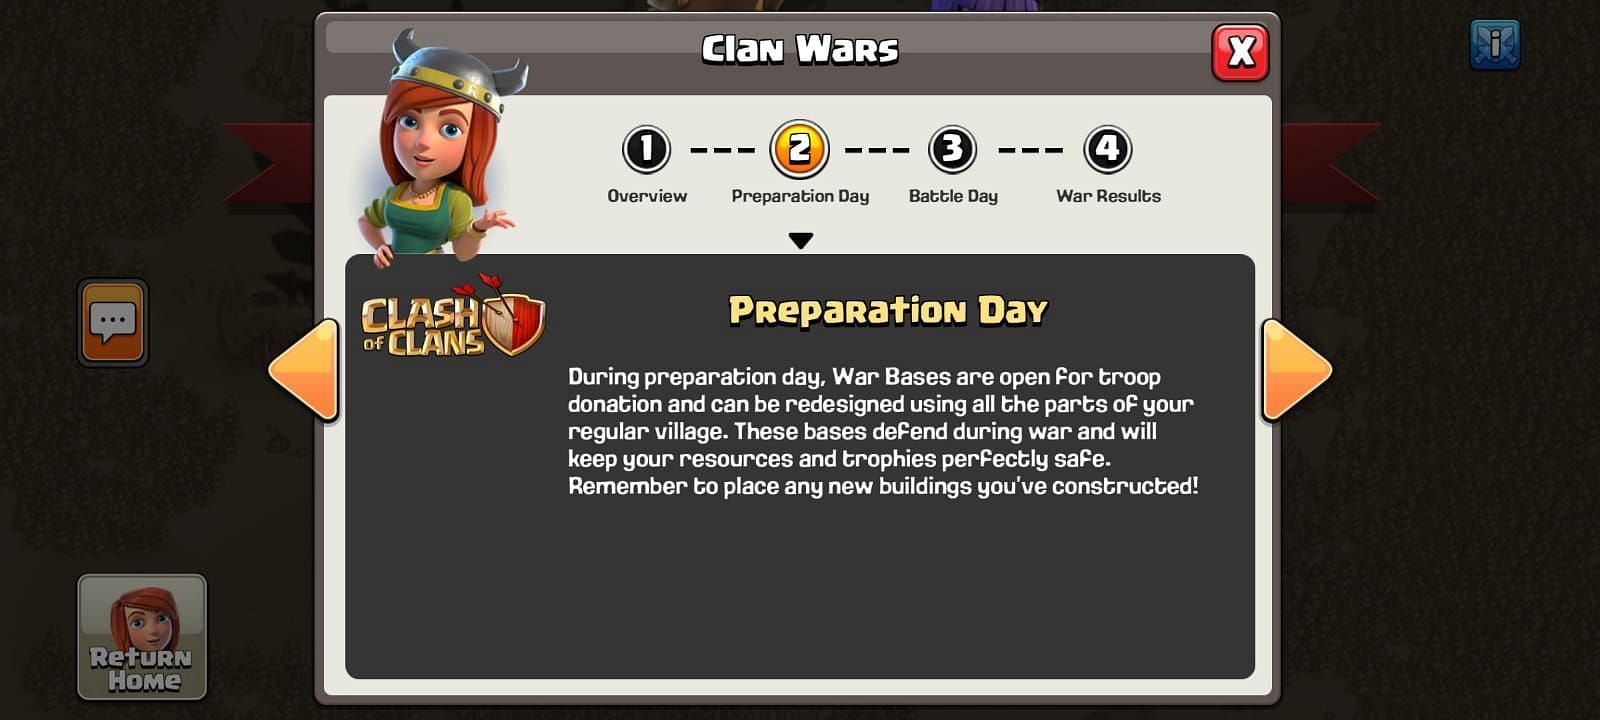  Preparation Day (Image via Clash of clans)